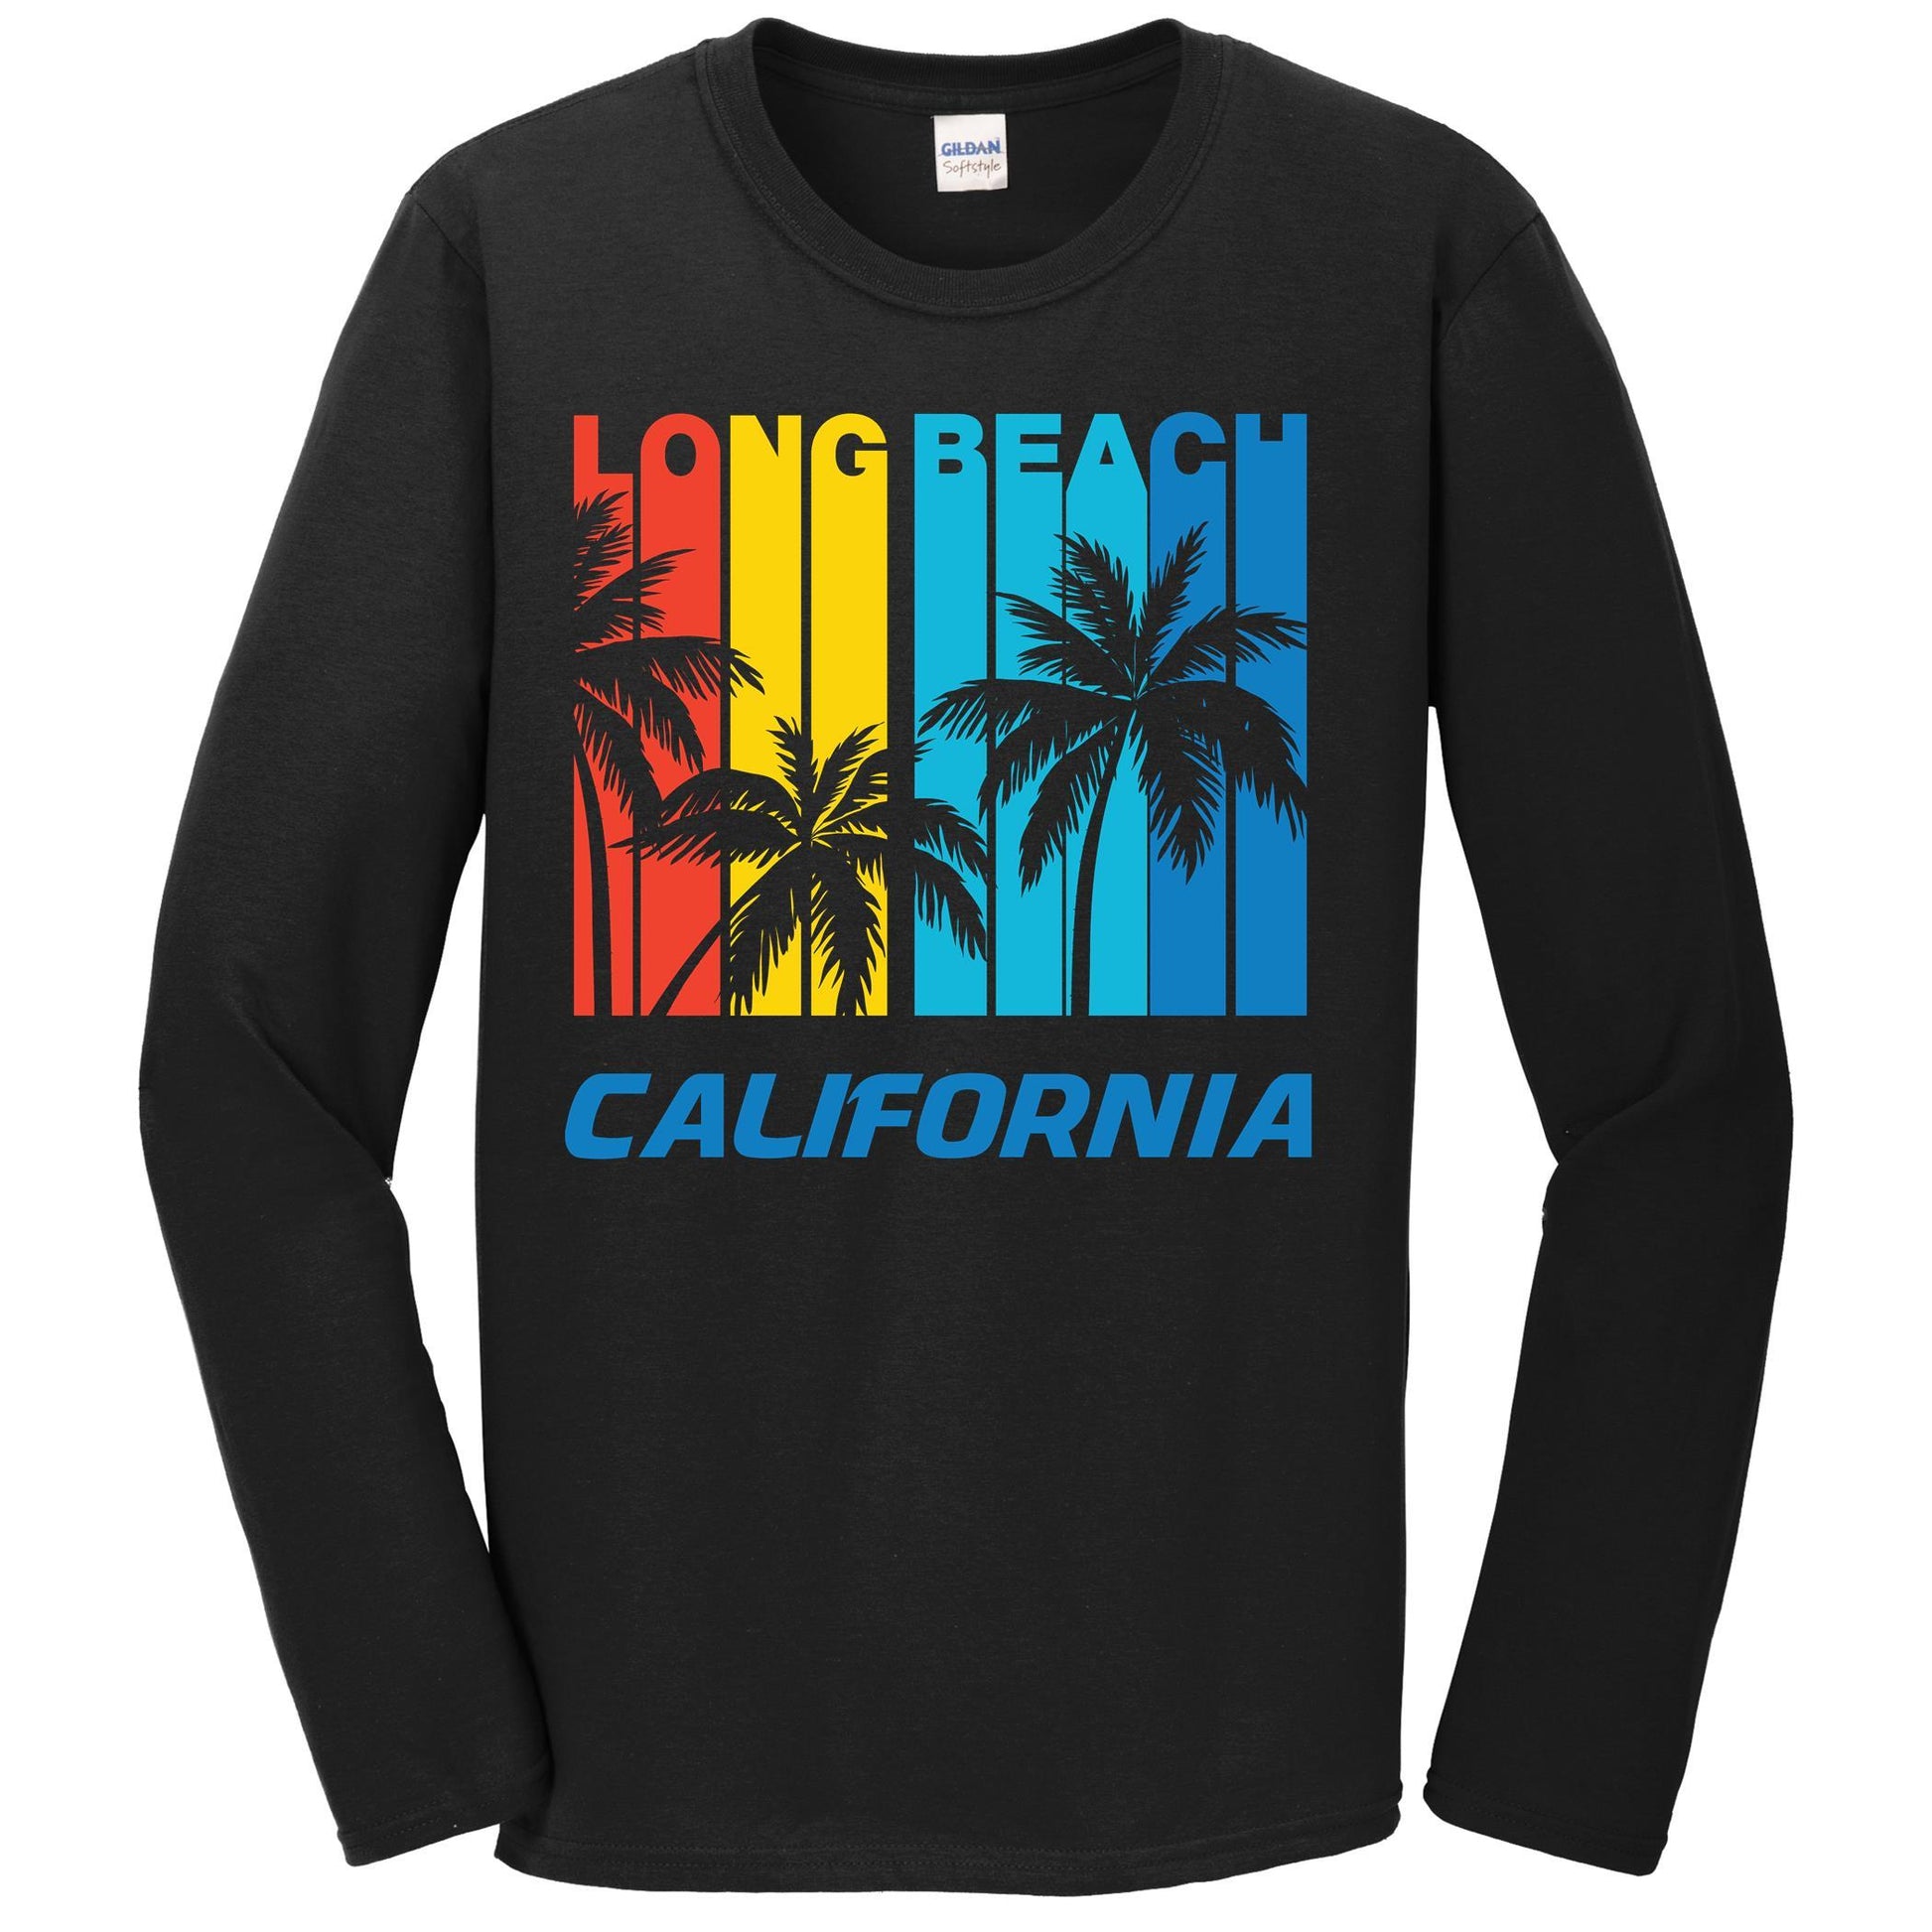 Long Beach California T-Shirt Design